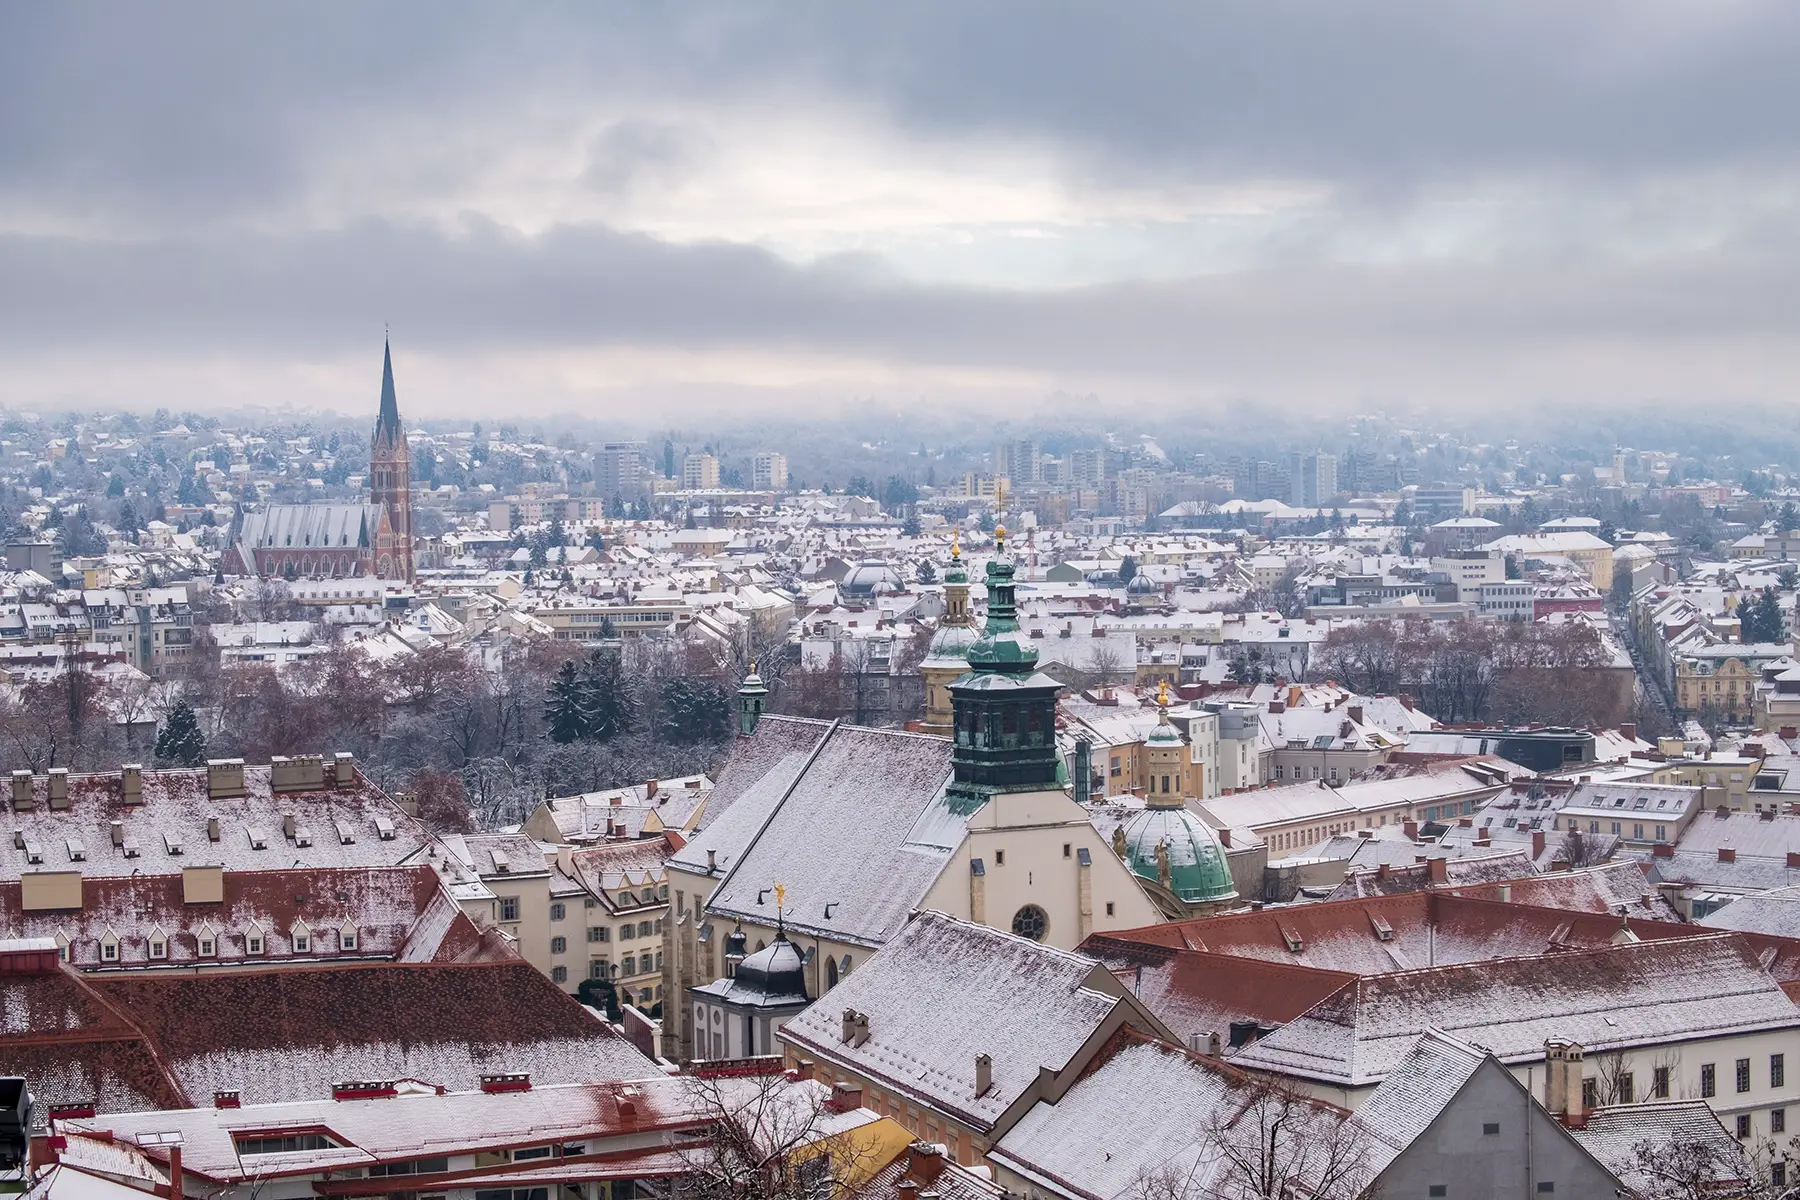 Graz on a snowy day